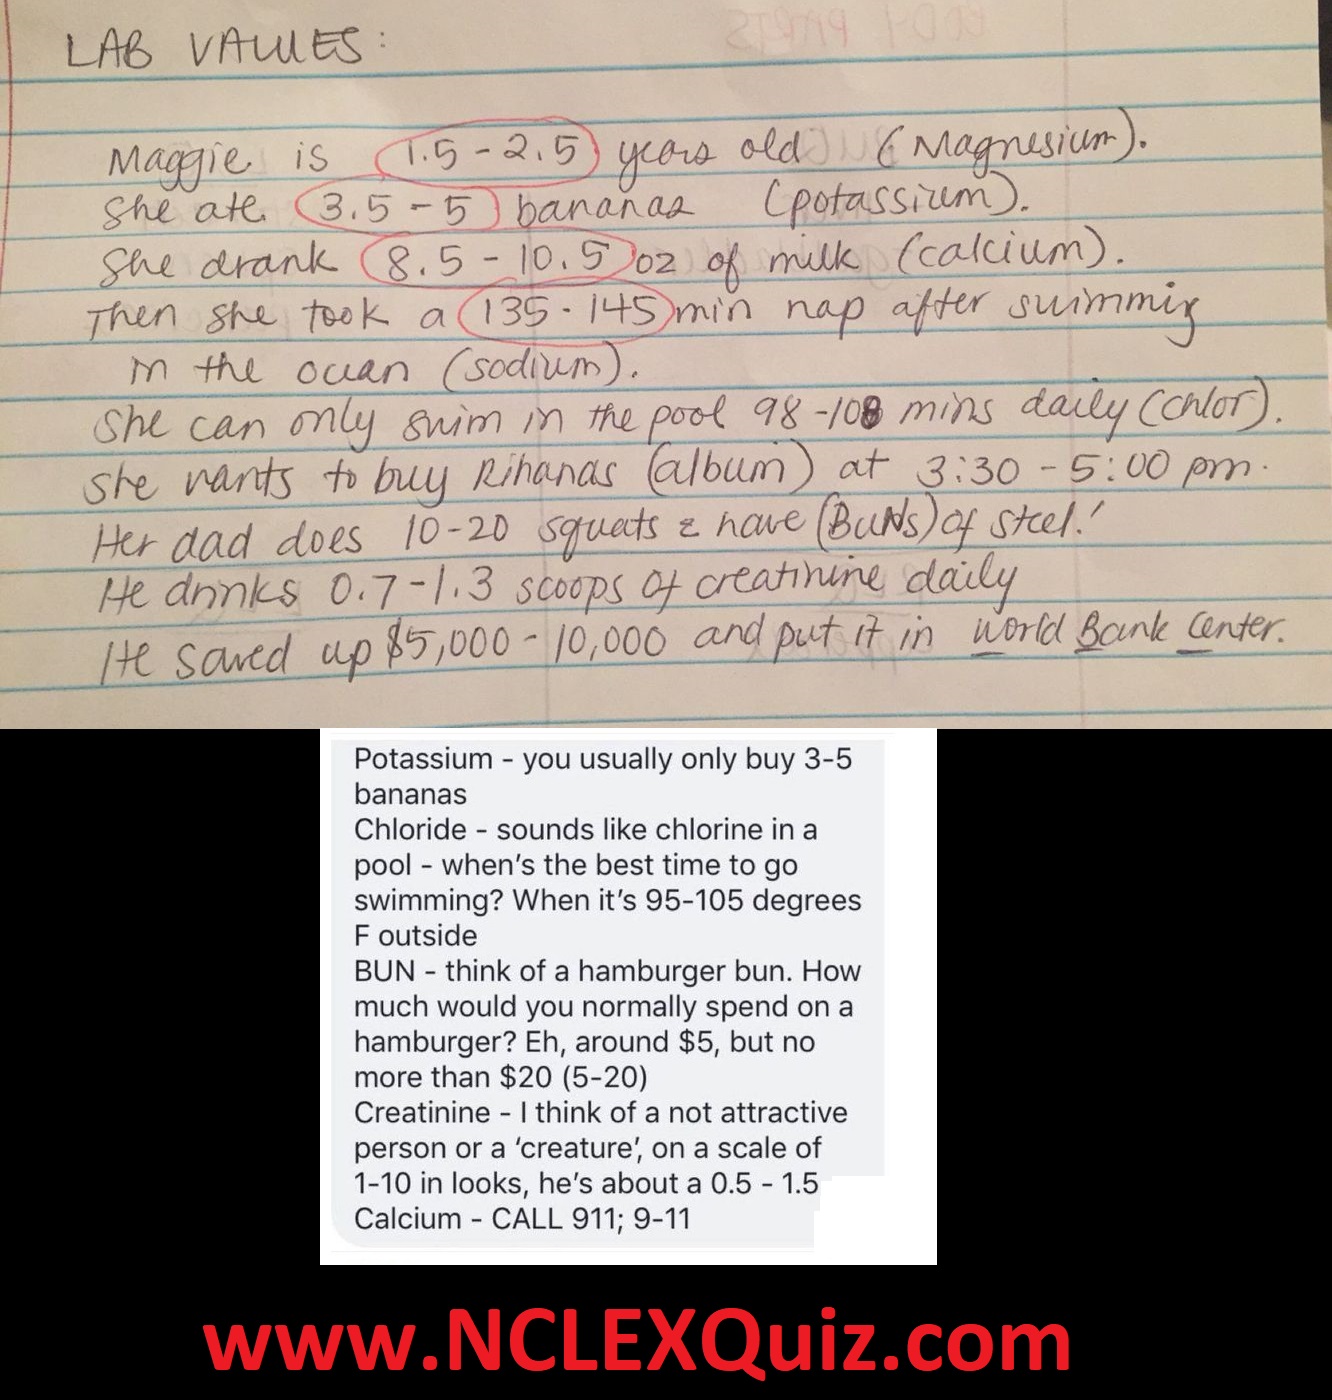 Memorizing Lab Values for the NCLEX Exam